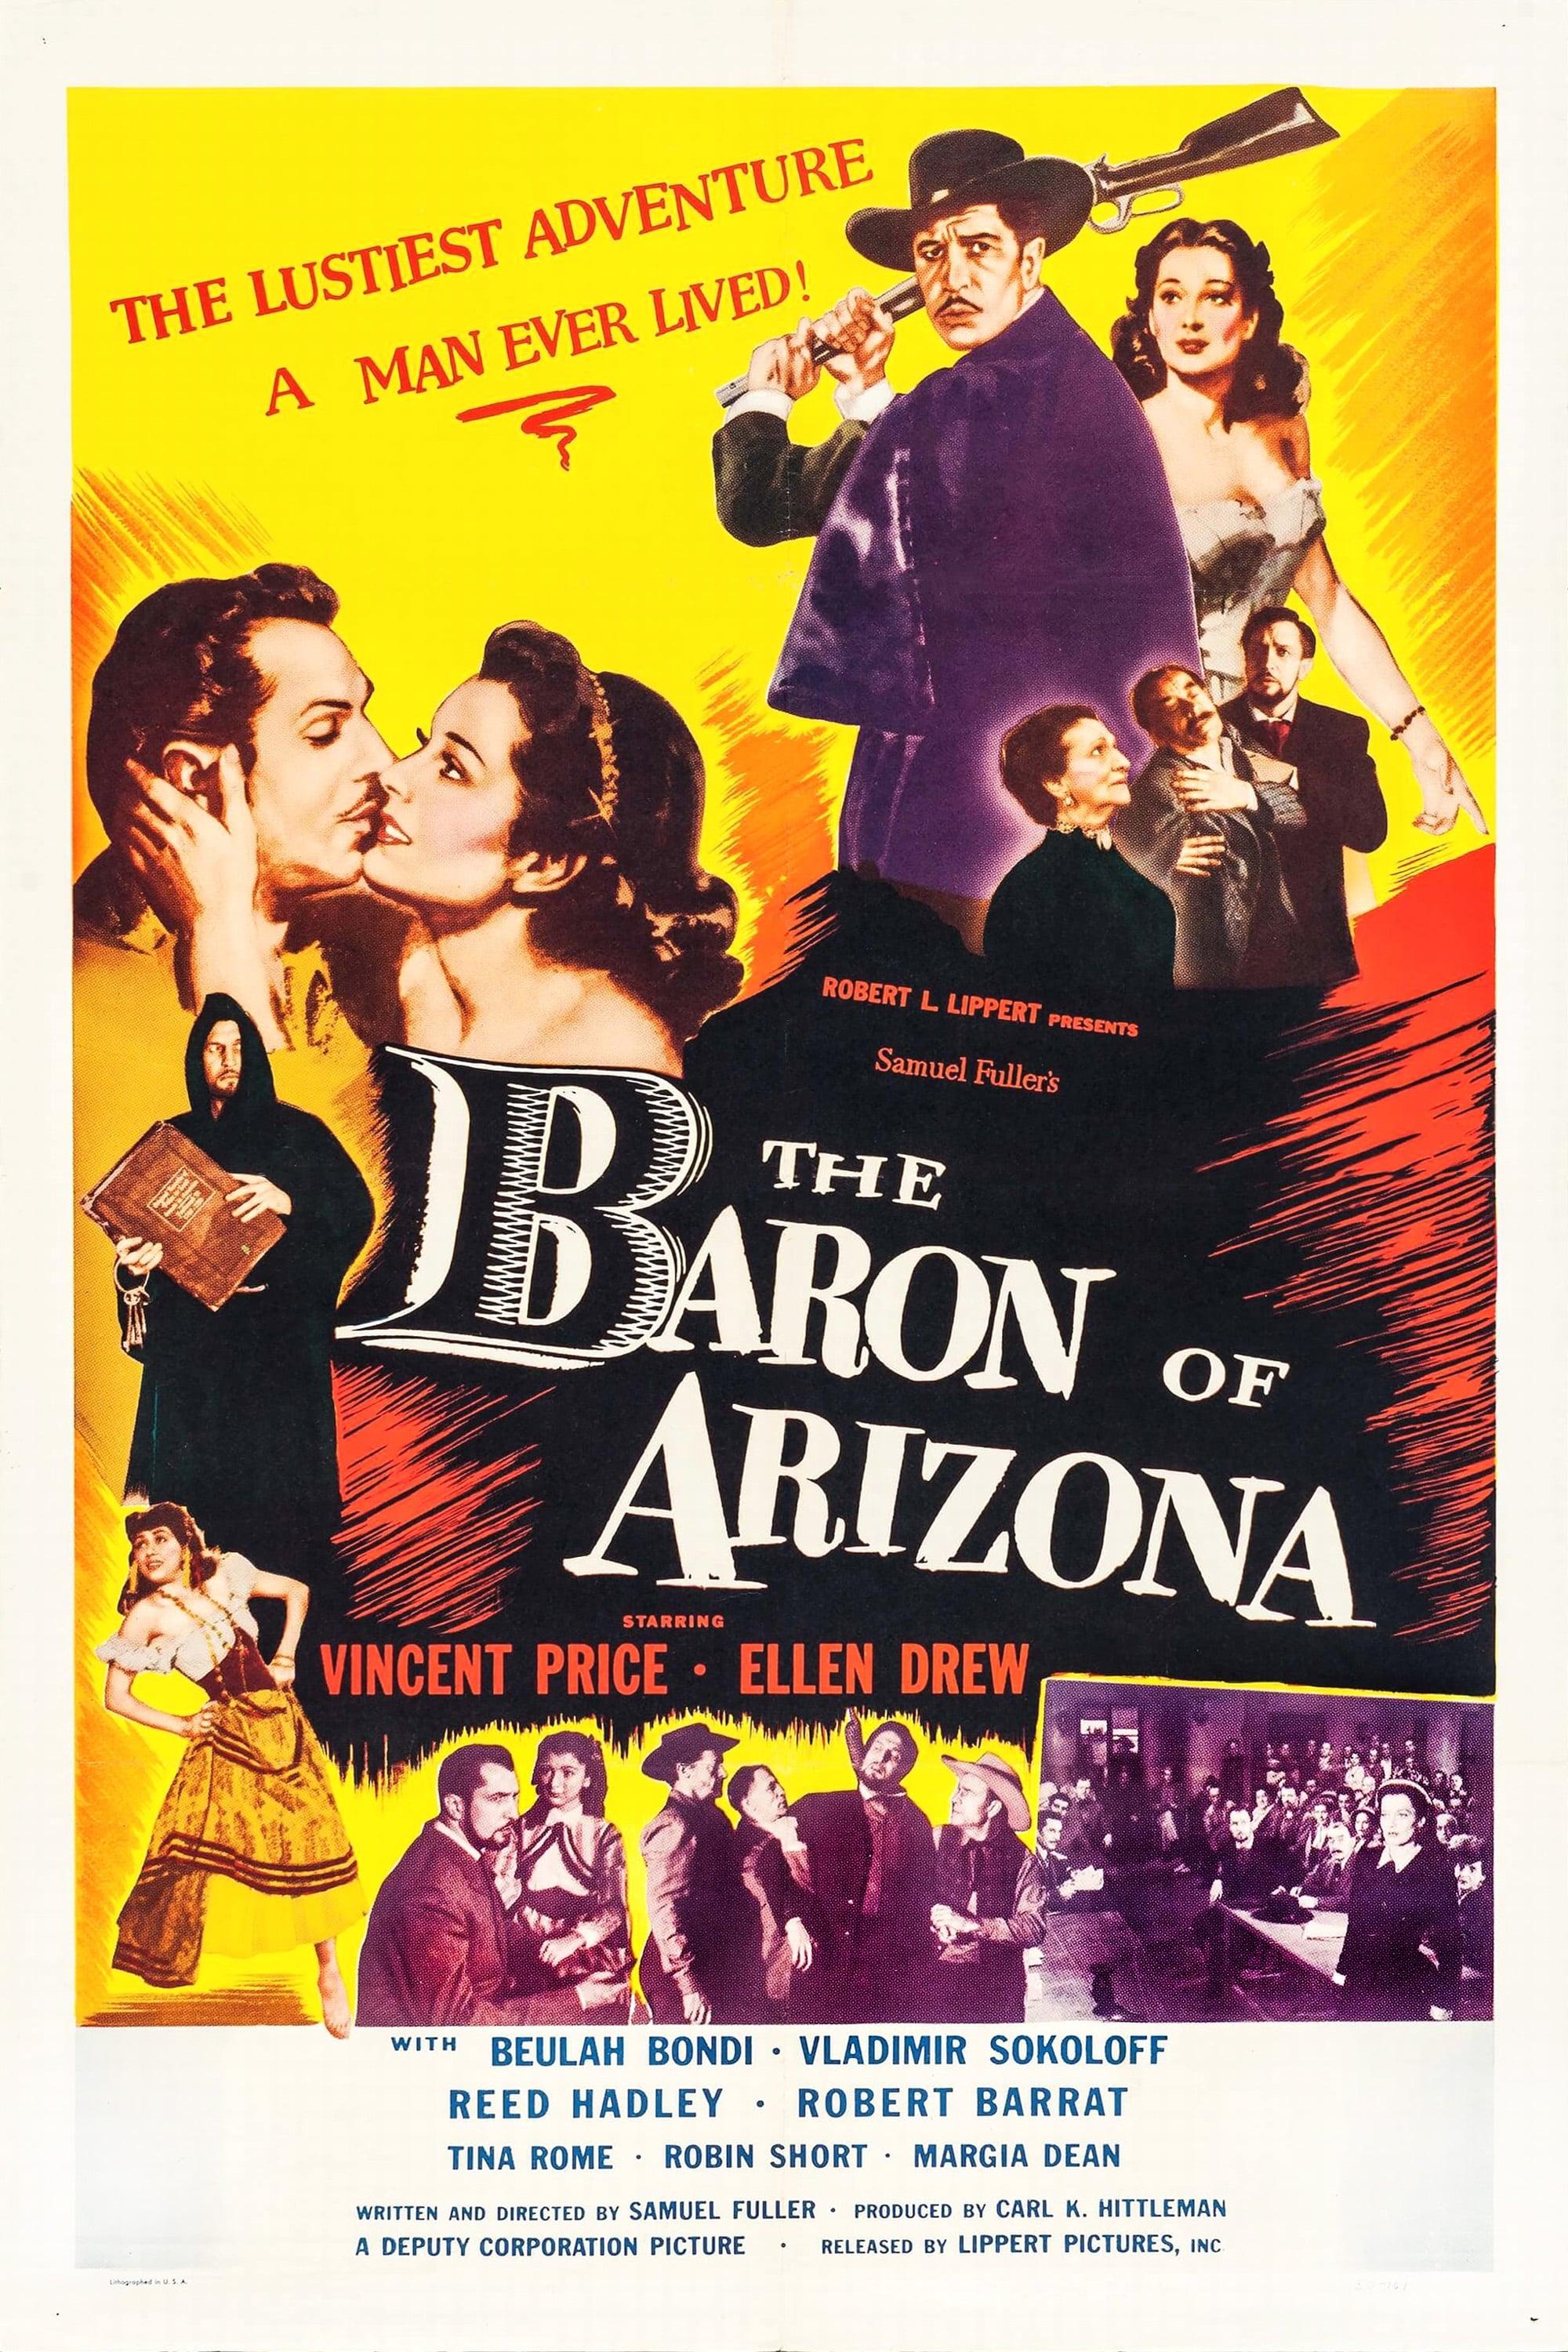 The Baron of Arizona poster